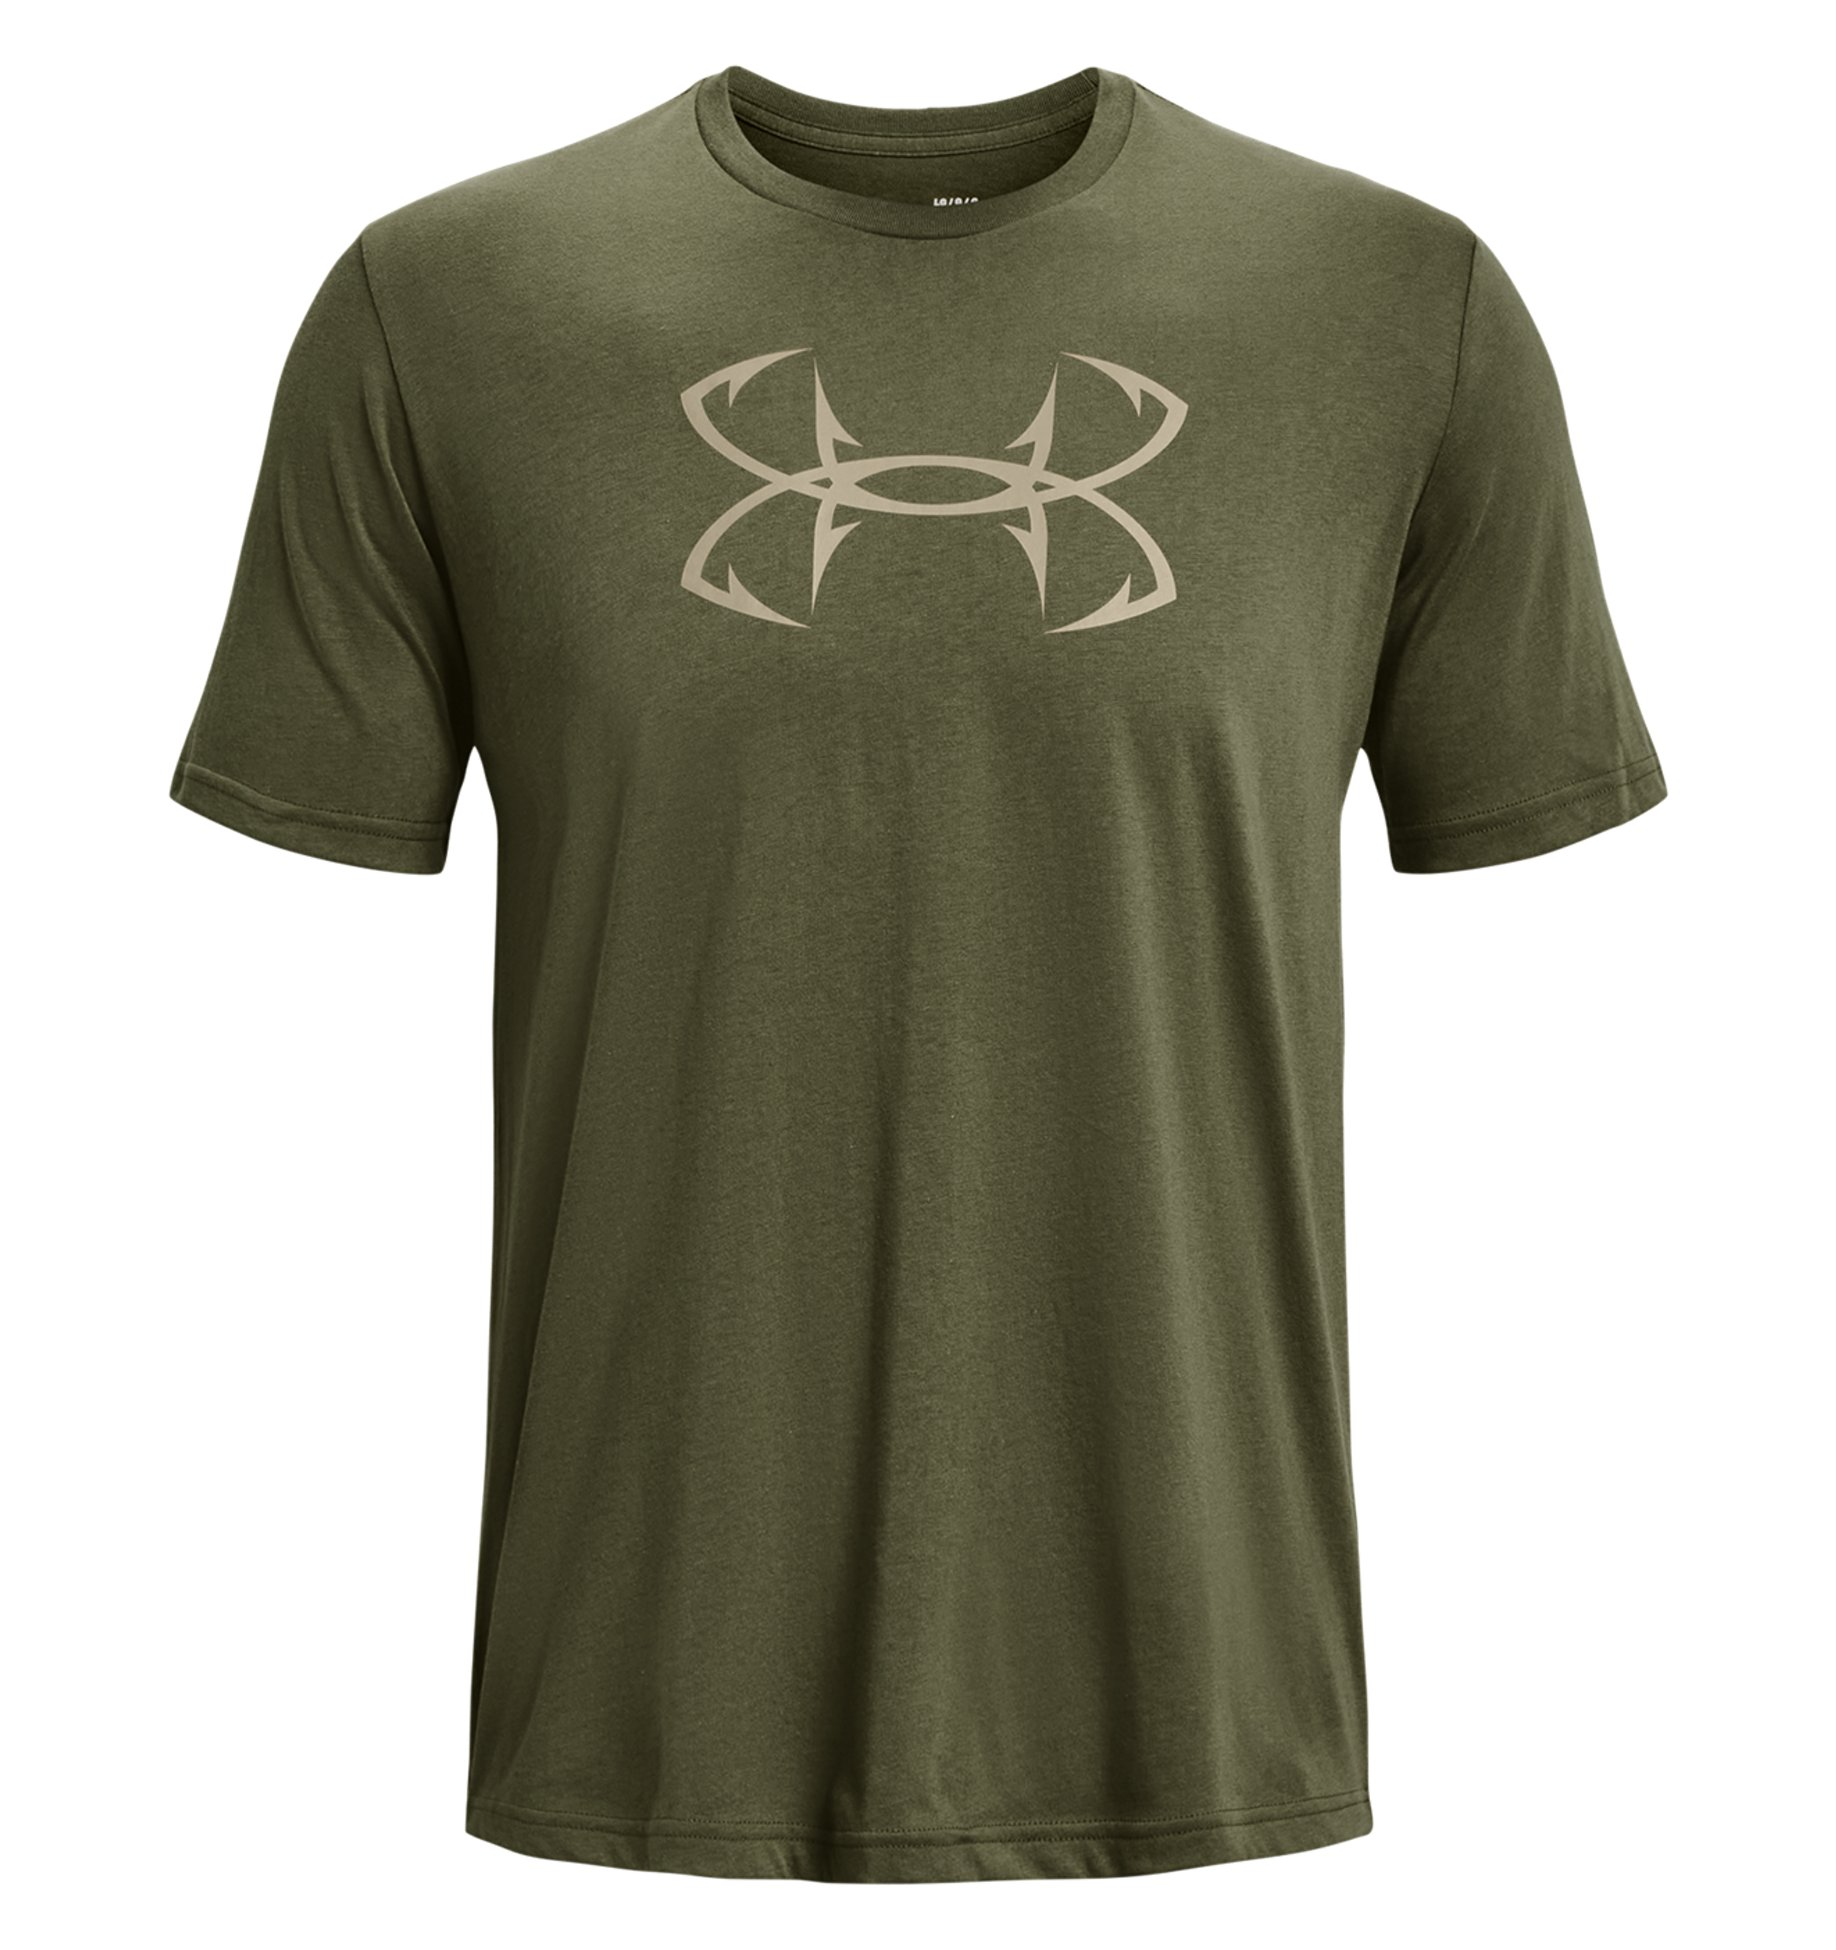 Under Armour Fish Hook Logo T-Shirt 1331197 - Marine OD Green, 3XL